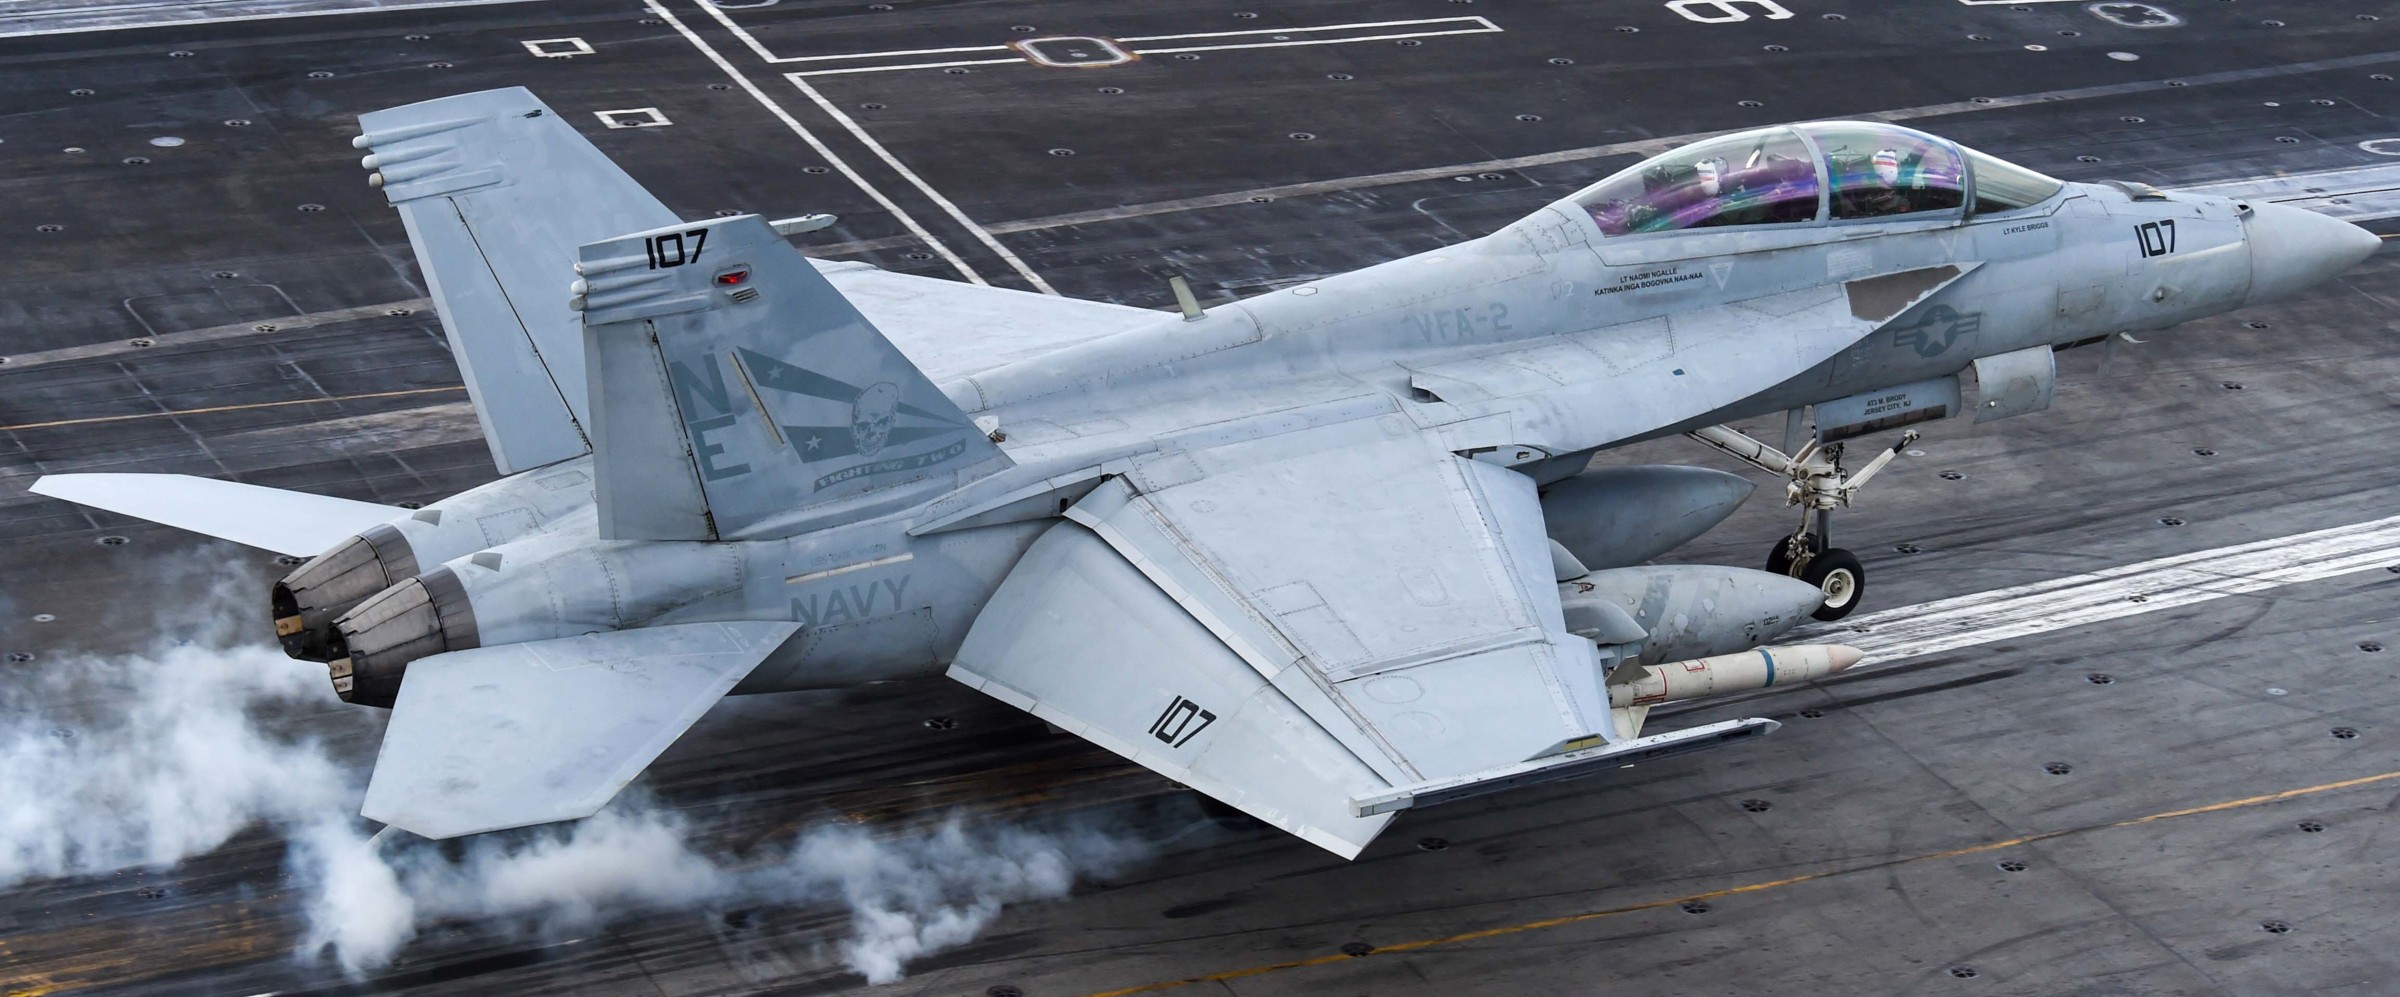 vfa-2 bounty hunters strike fighter squadron us navy f/a-18f super hornet carrier air wing cvw-2 uss carl vinson cvn-70 94